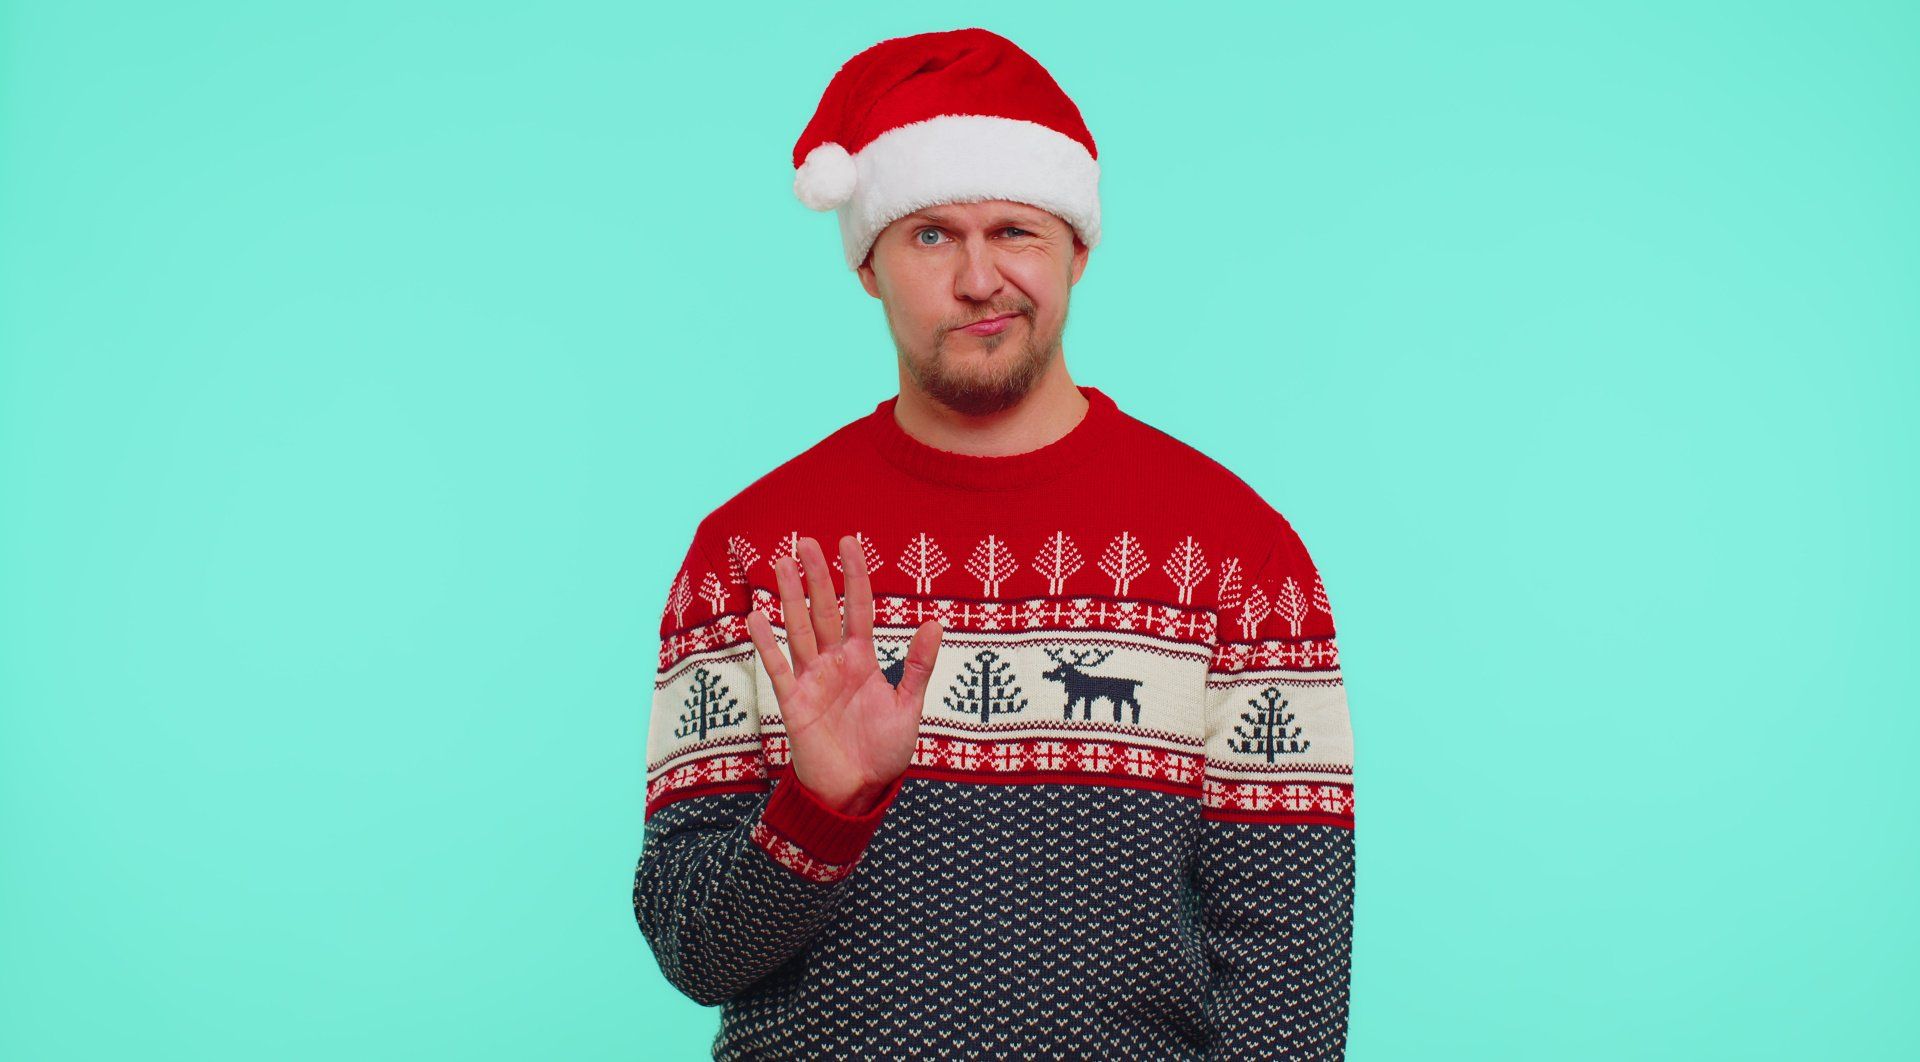 Man in Santa hat and Christmas sweater raising his hand to say no.